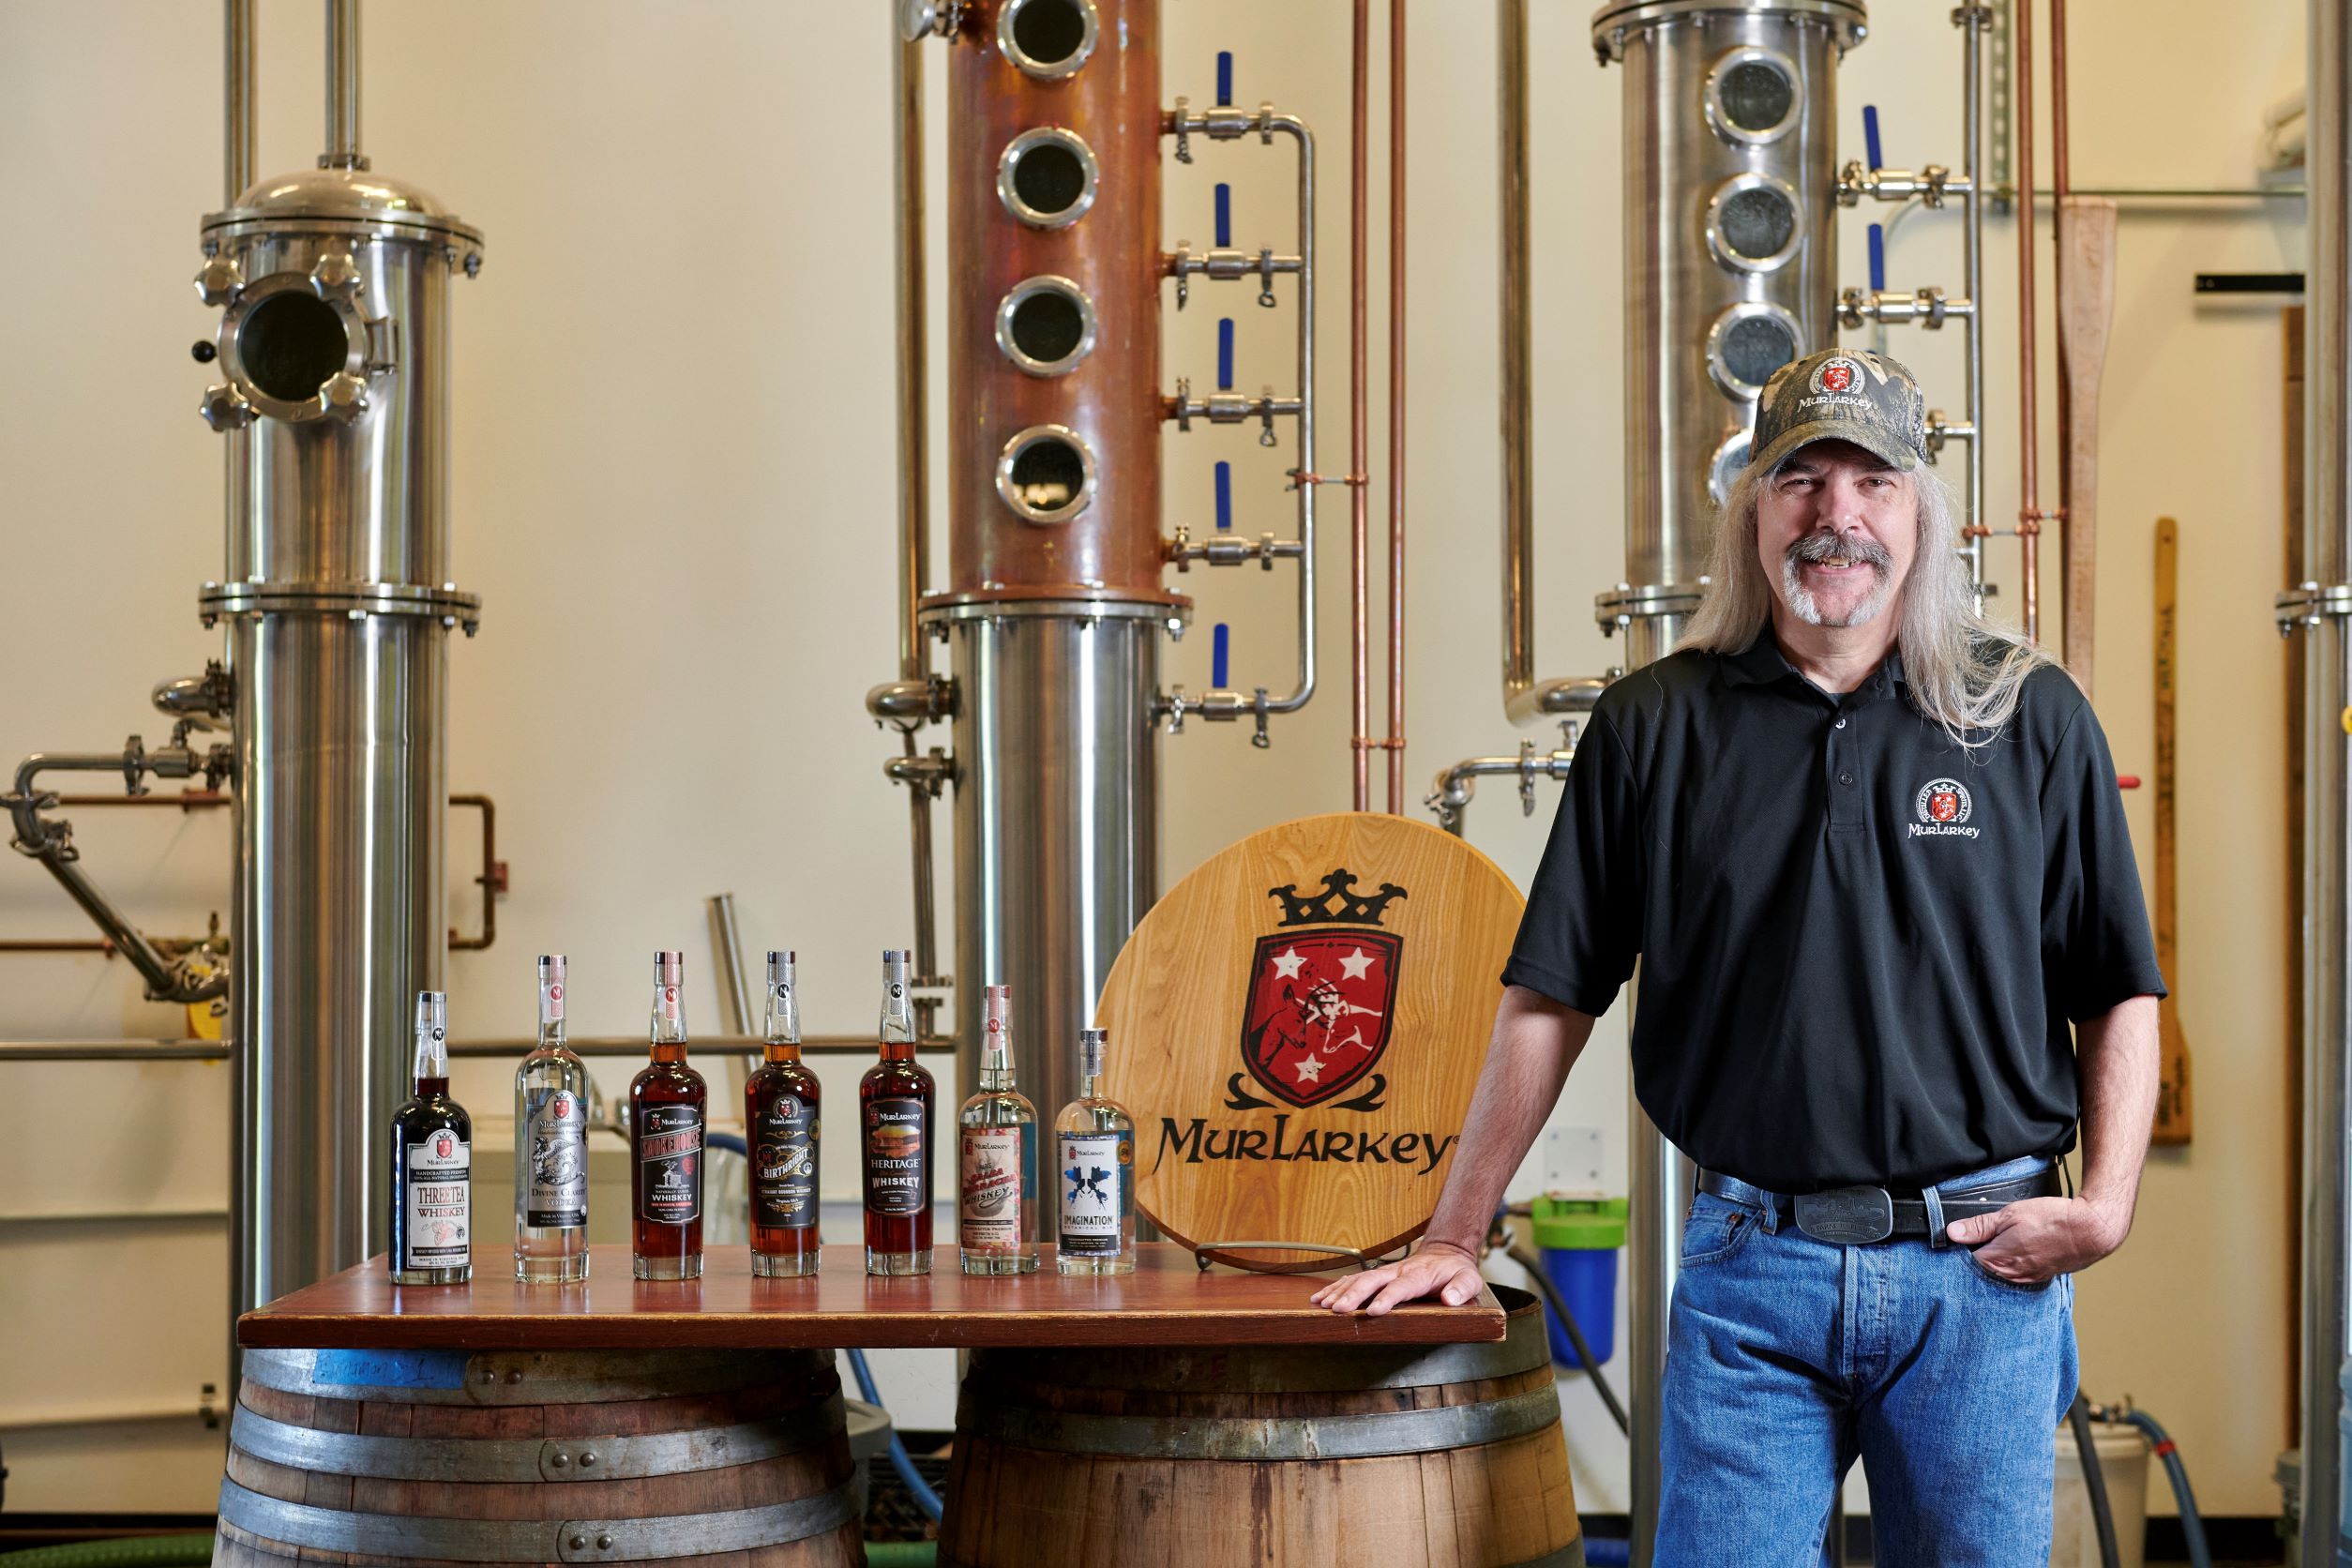 Kevin Szady, MurLarkey Distilled Spirits, Prince William County